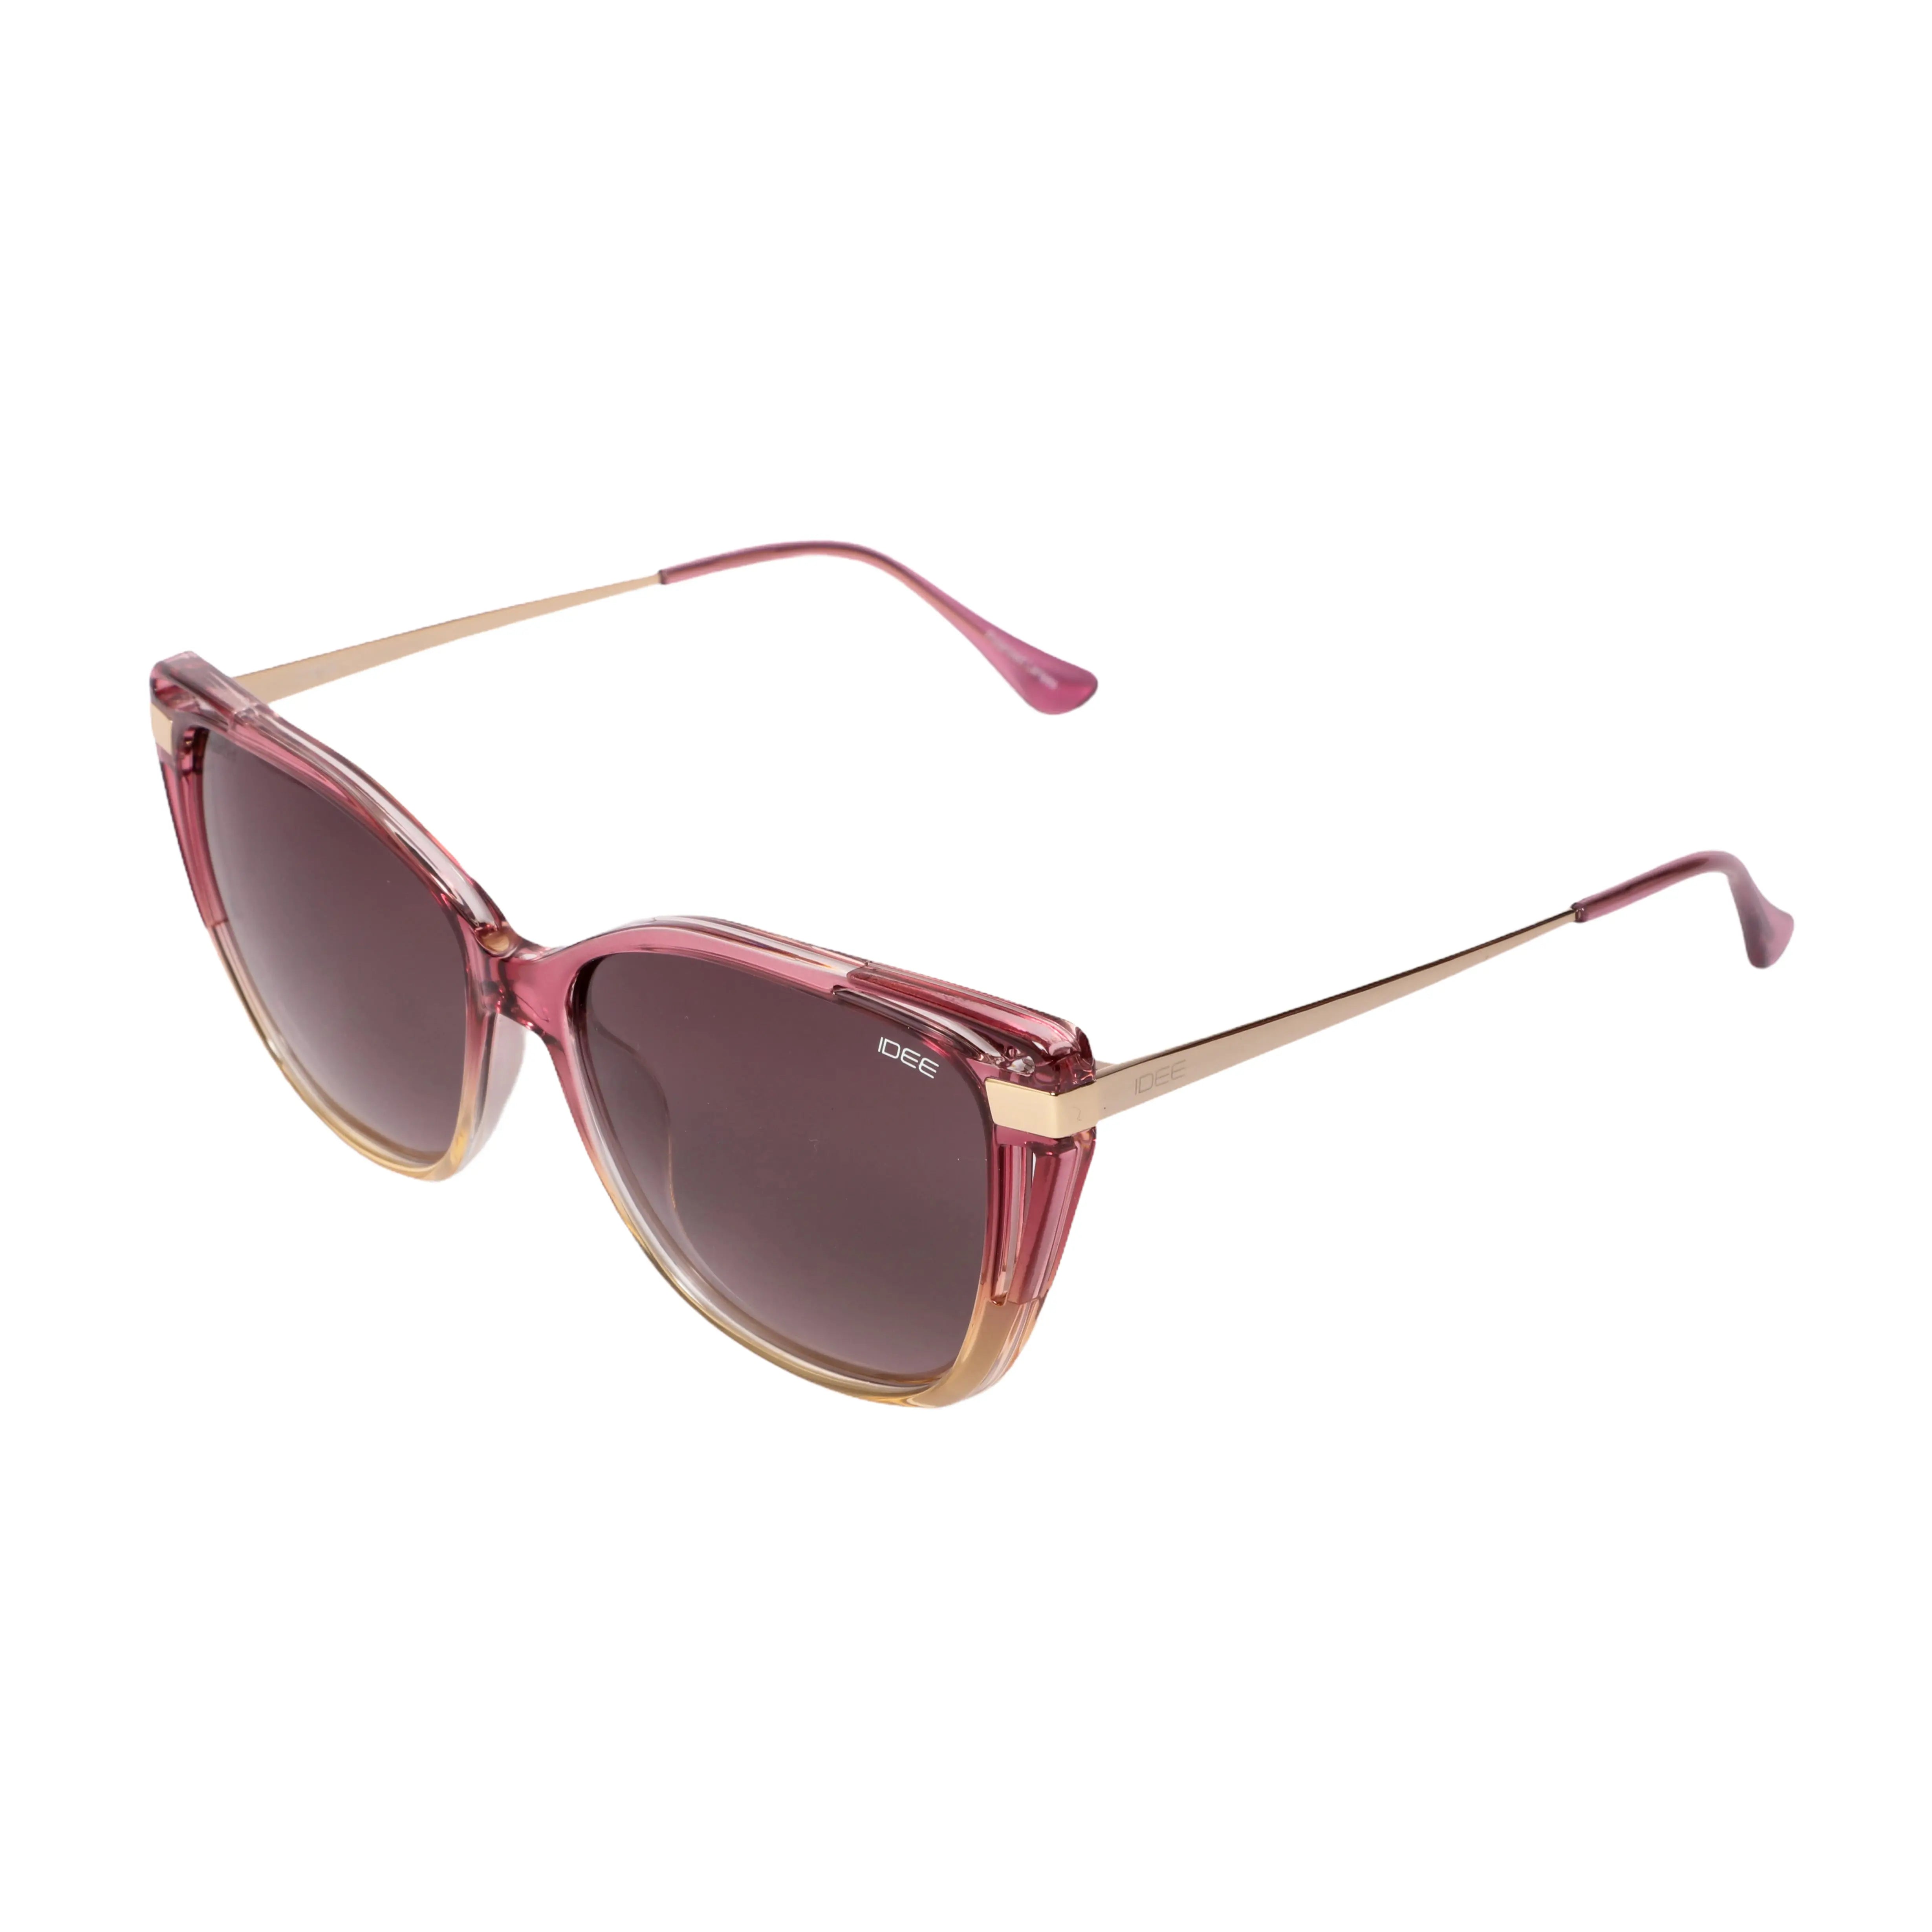 IDEE-S3016--C4 Sunglasses - Premium Sunglasses from IDEE - Just Rs. 3740! Shop now at Laxmi Opticians